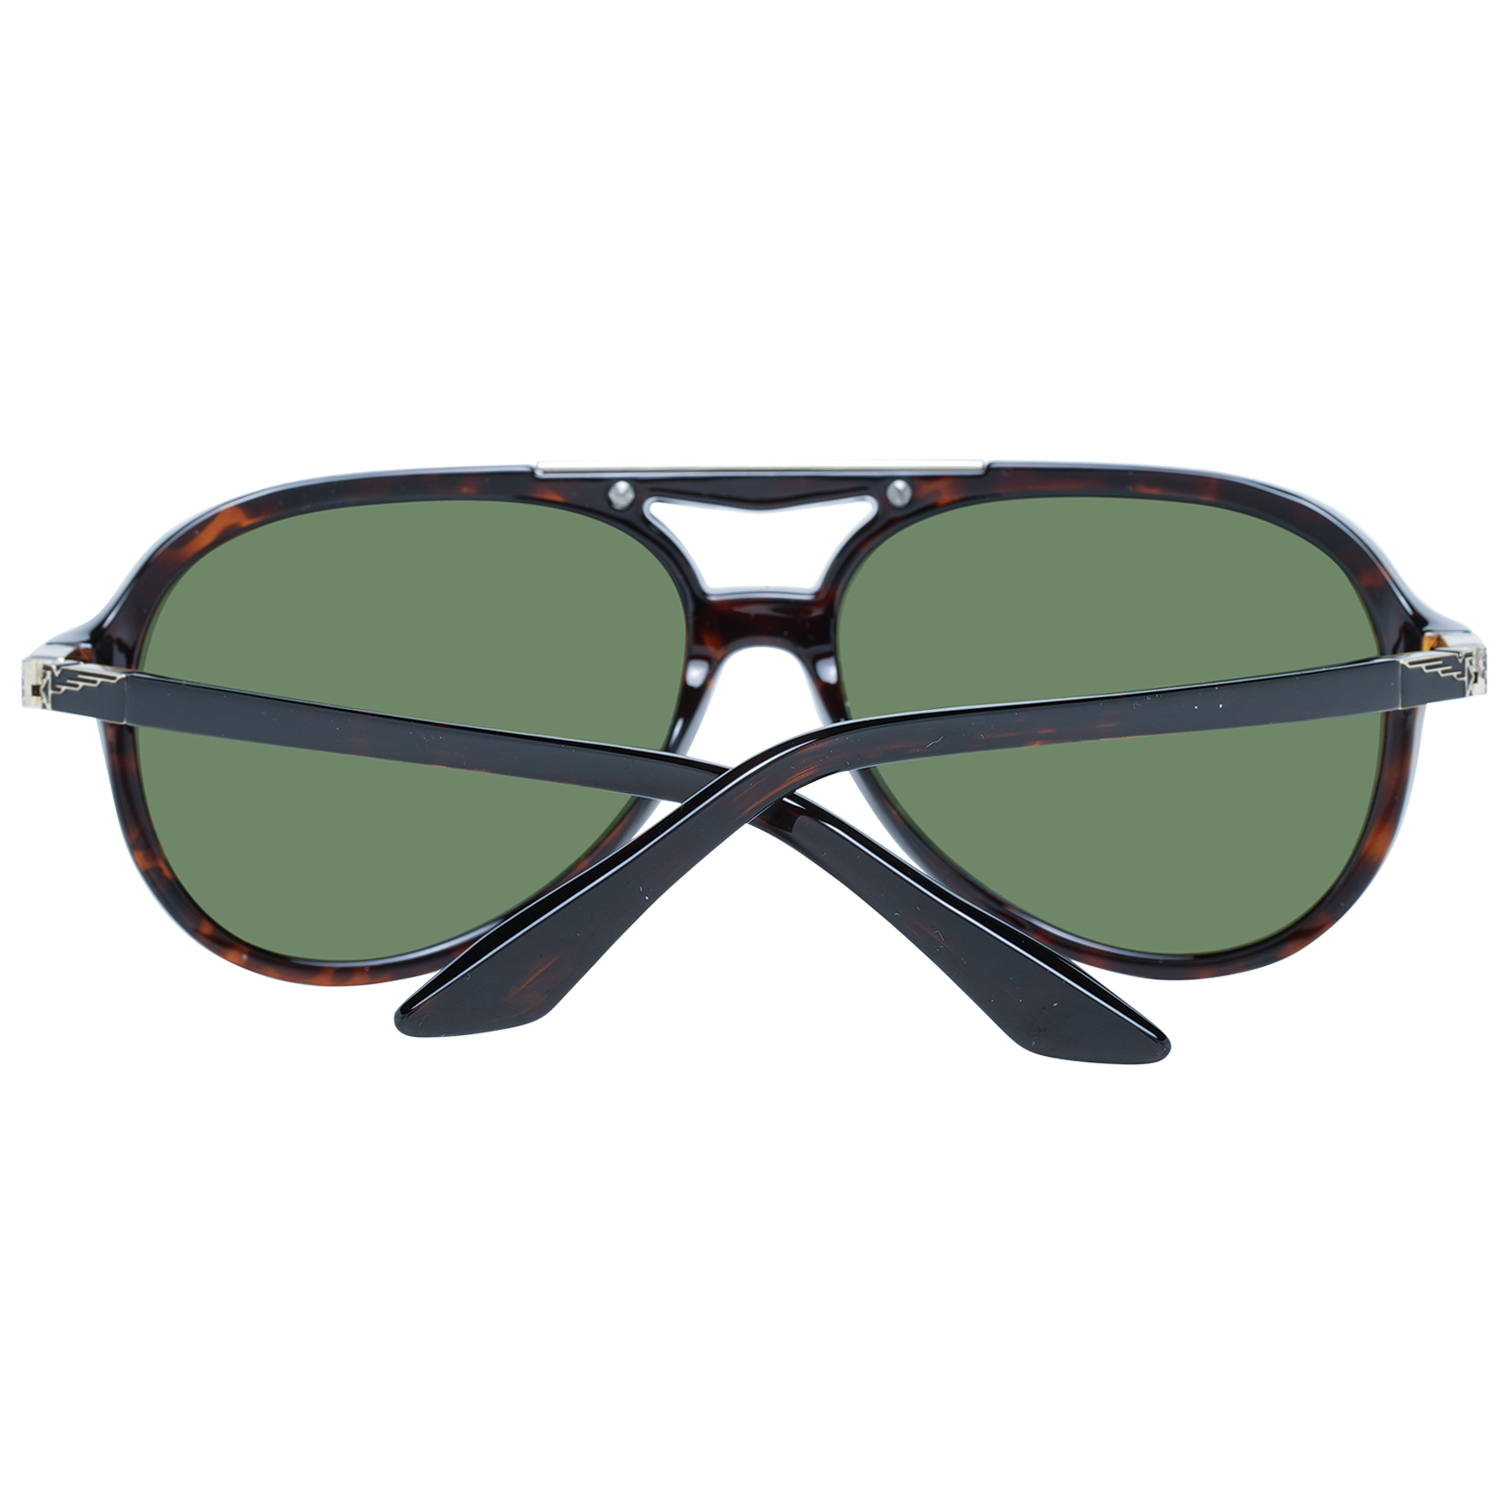 Longines Sunglasses Longines Sunglasses LG0003-H 52N 59mm Eyeglasses Eyewear UK USA Australia 